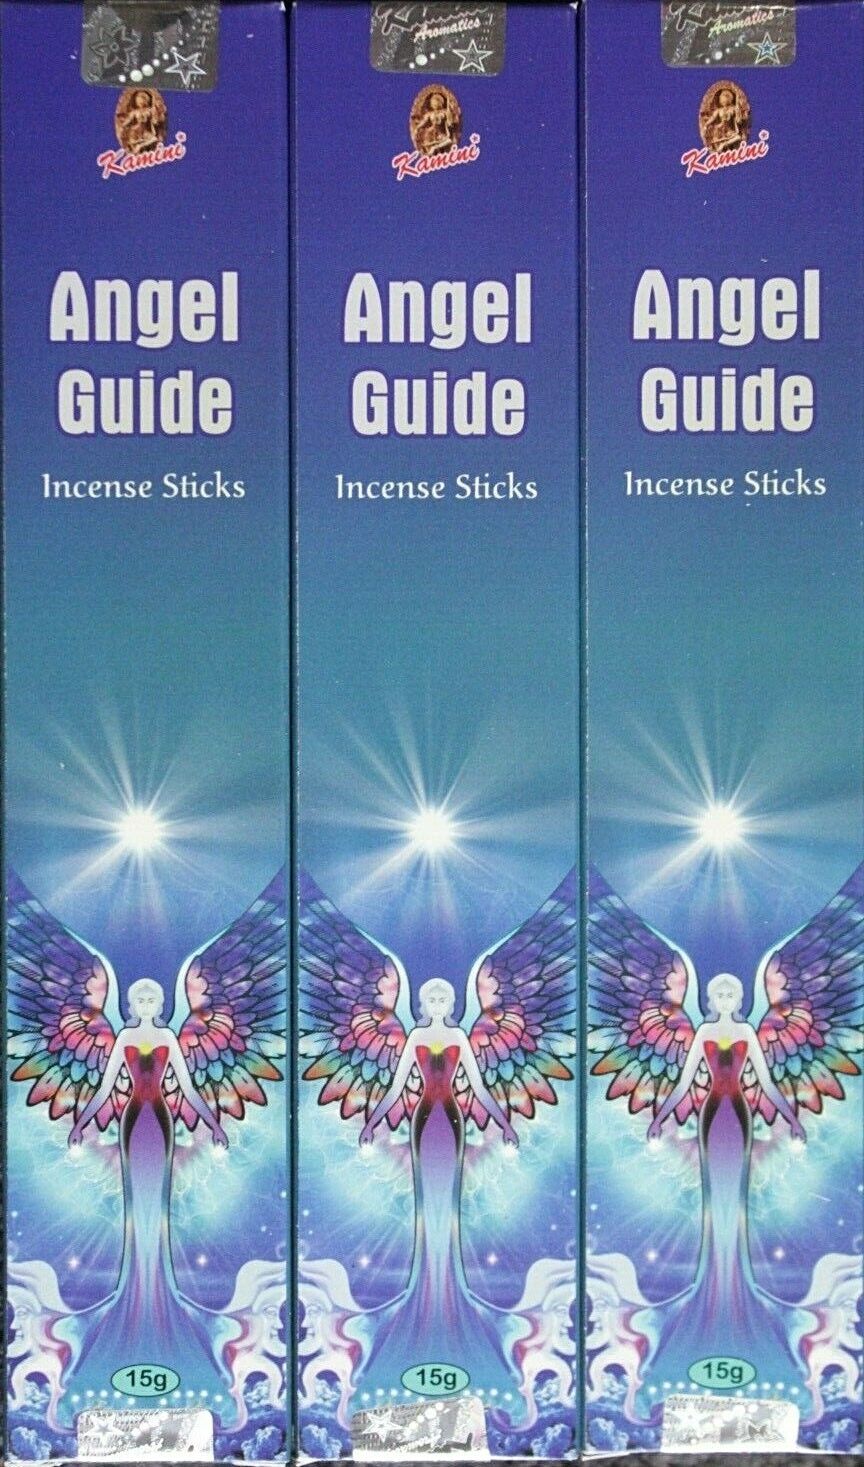 Angel Guide Incense Sticks